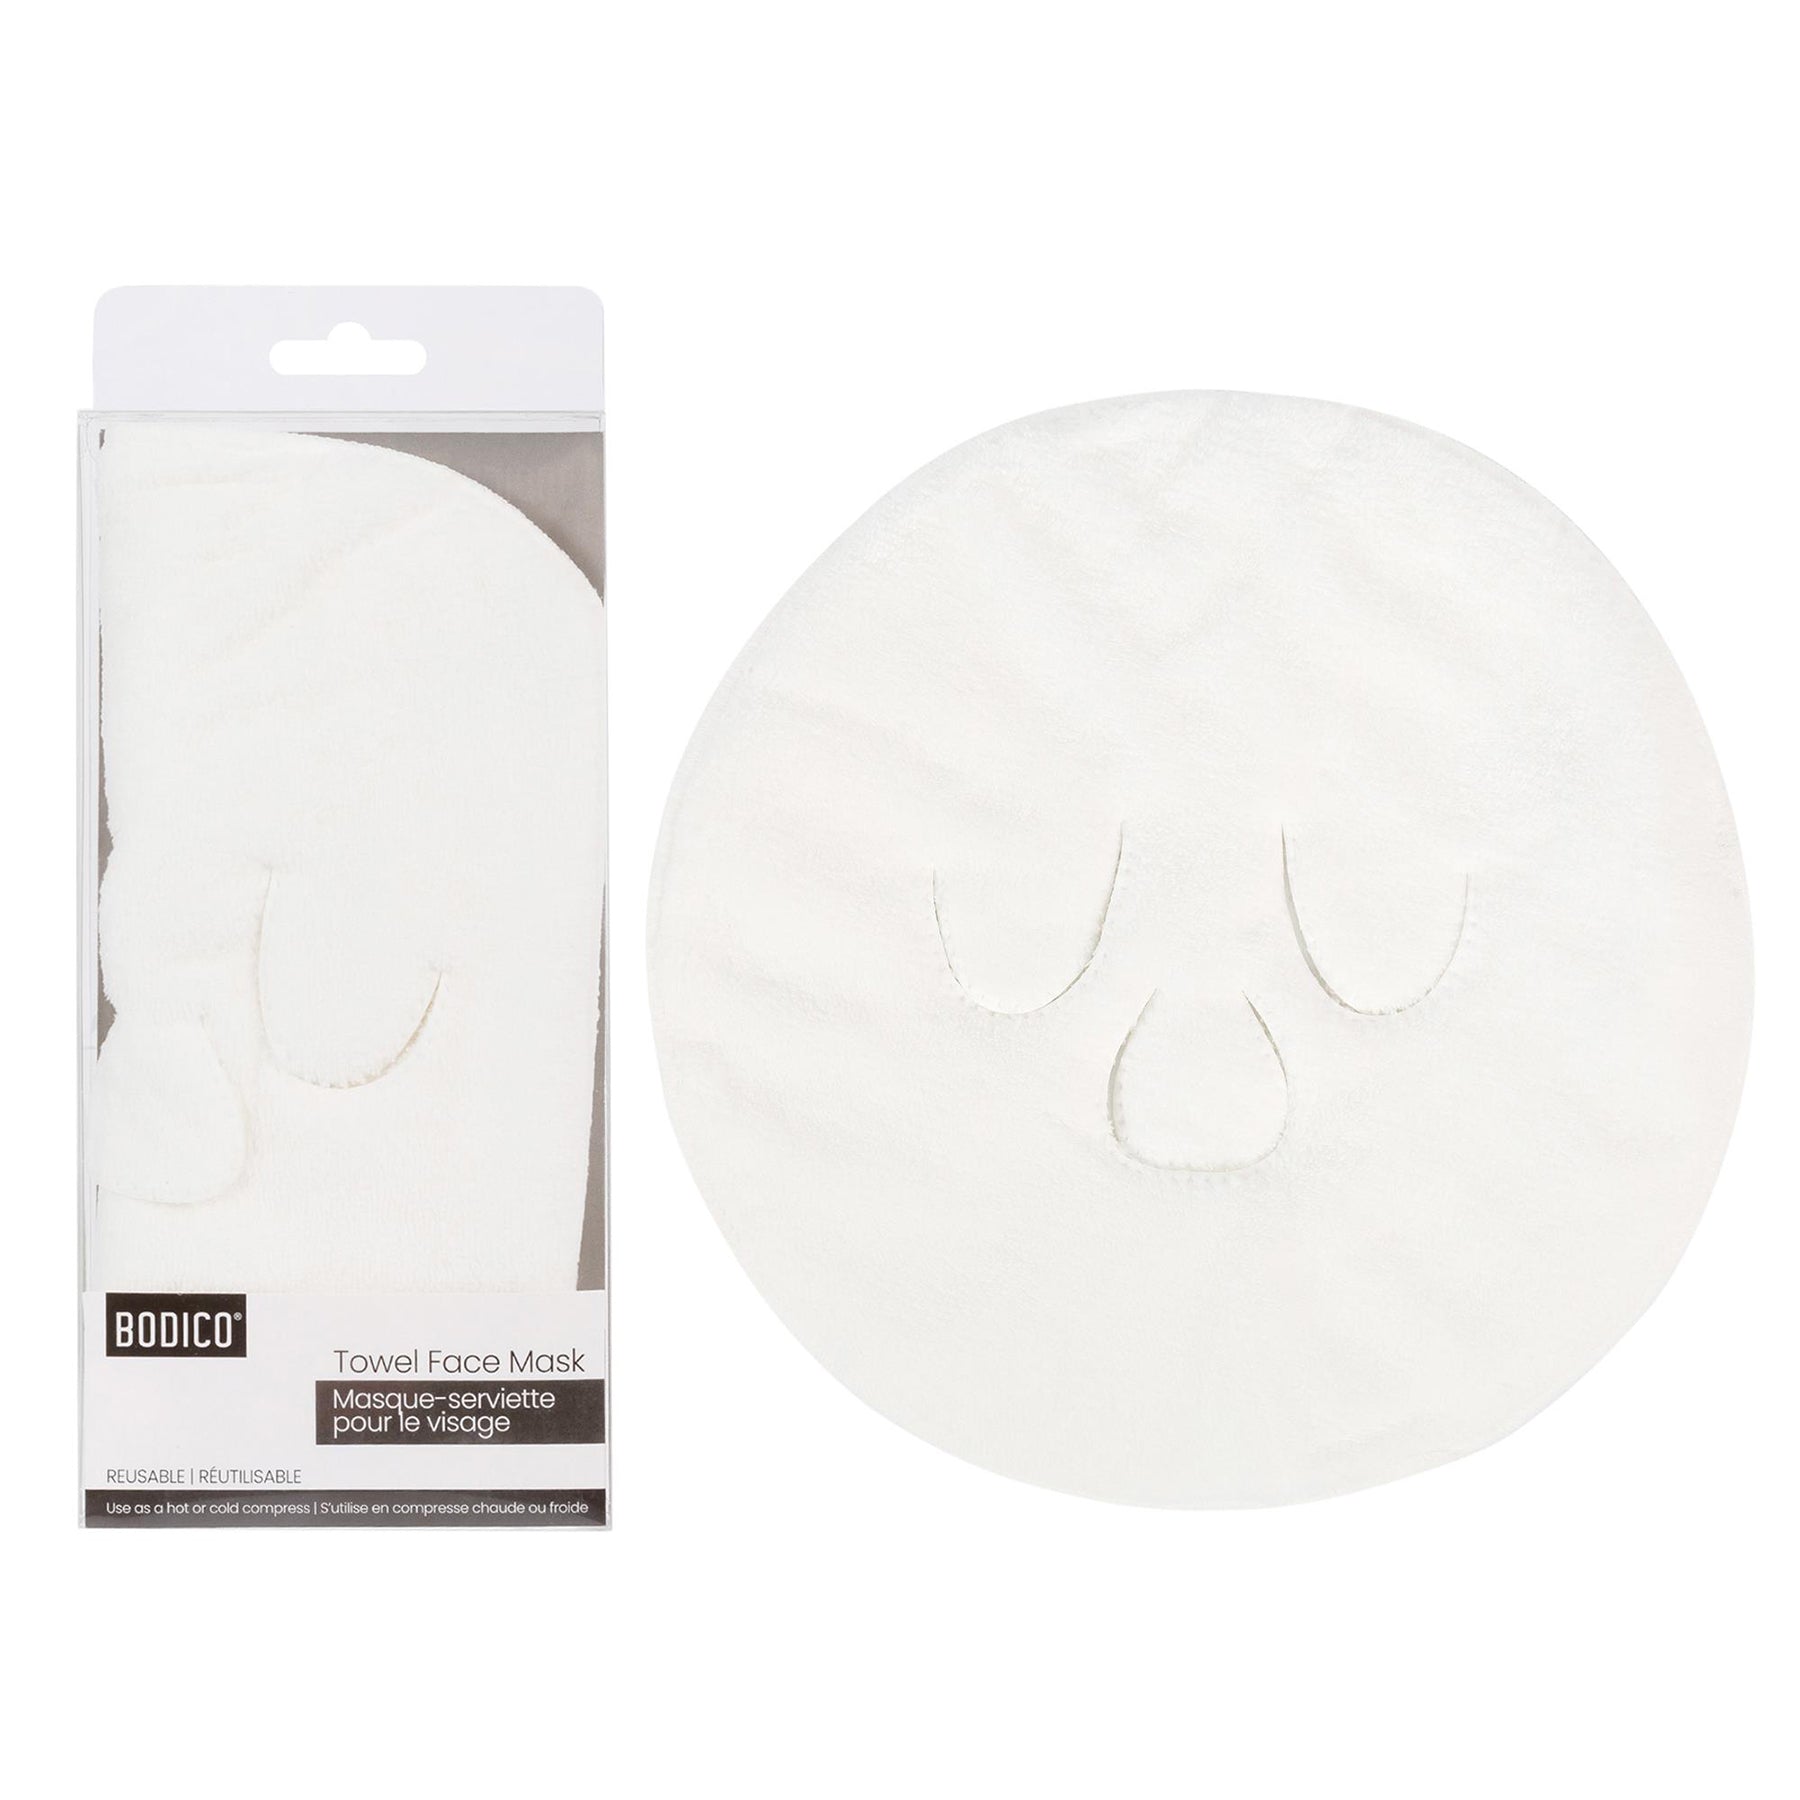 Bodico Face Mask Towel Reusable Soft Plush Microfiber One Size